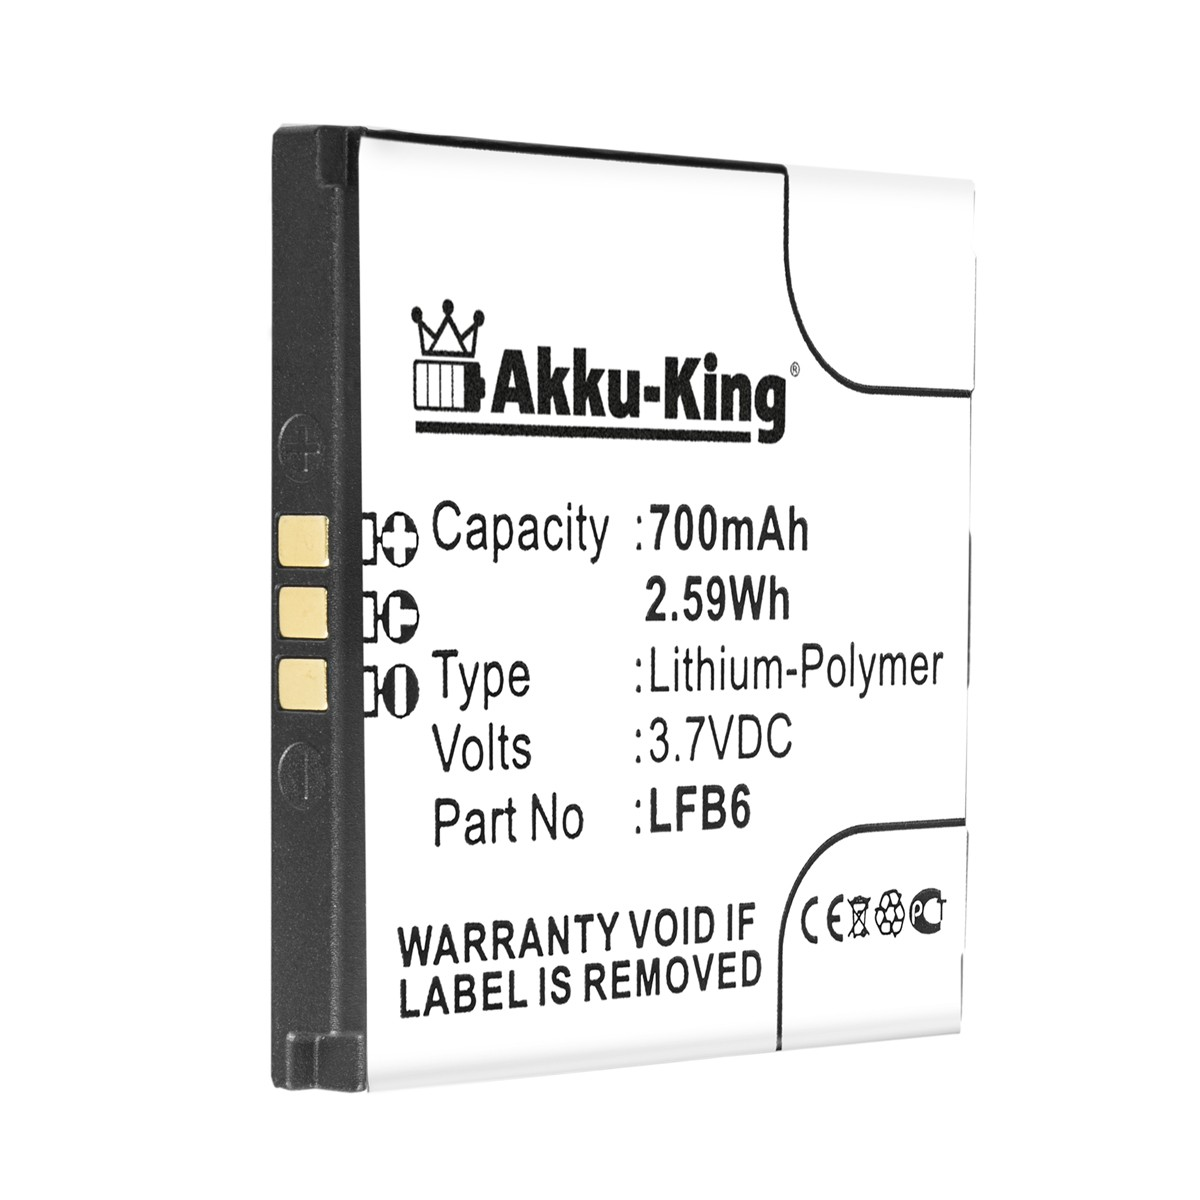 AKKU-KING Akku kompatibel mit Volt, Handy-Akku, Li-Ion Kazam LFB6 3.7 700mAh